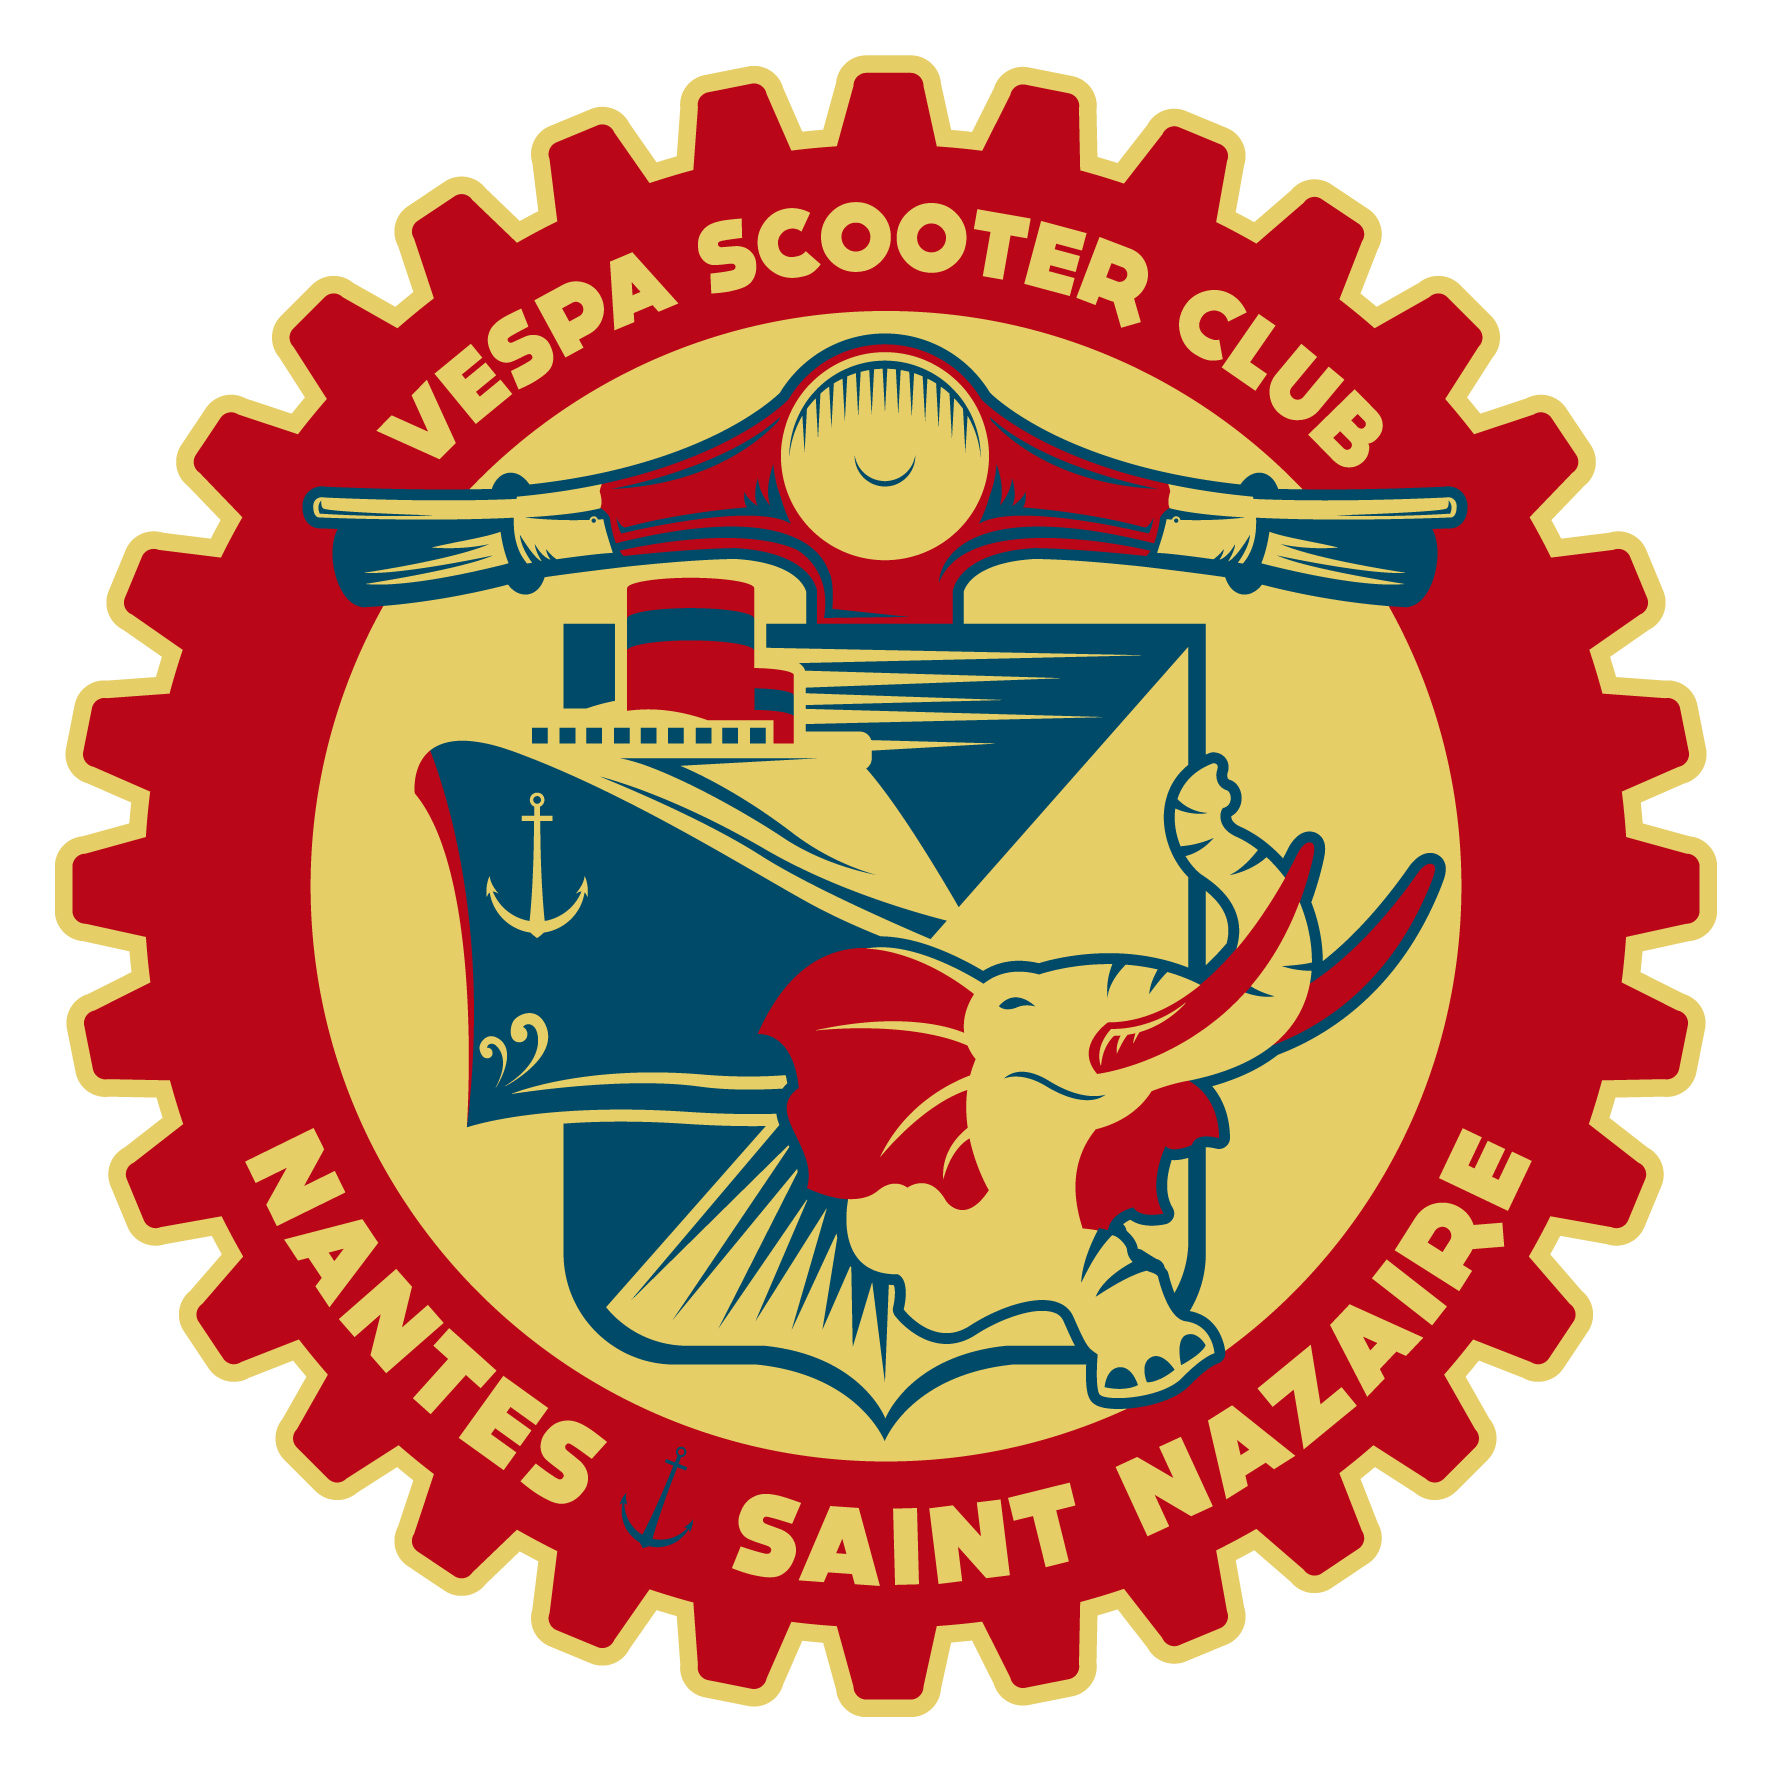 Vespa Scooter Club Nantes St Nazaire